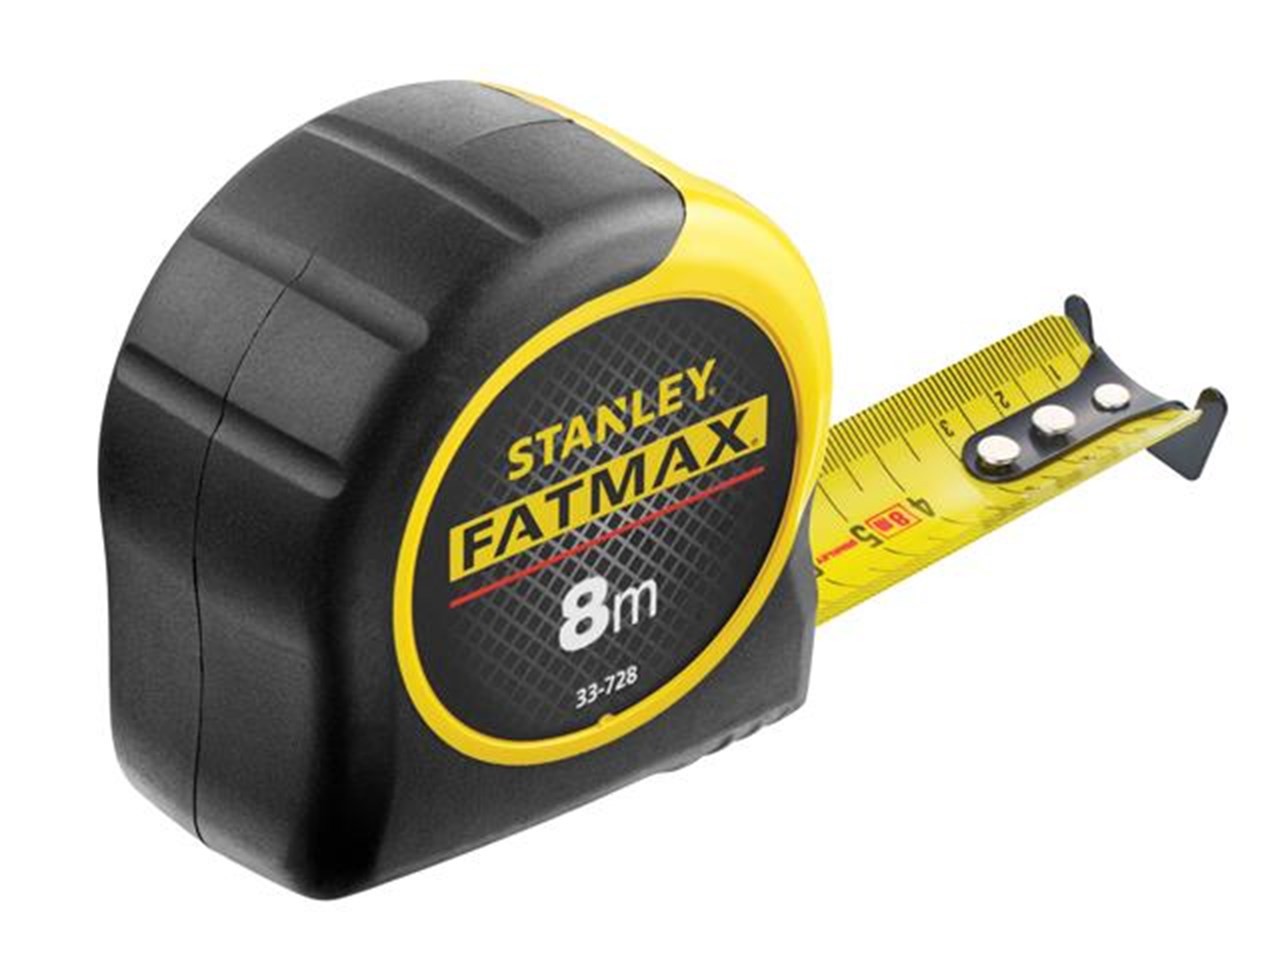 Stanley+FatMax+8m+Tape+Measure+50mm++033726